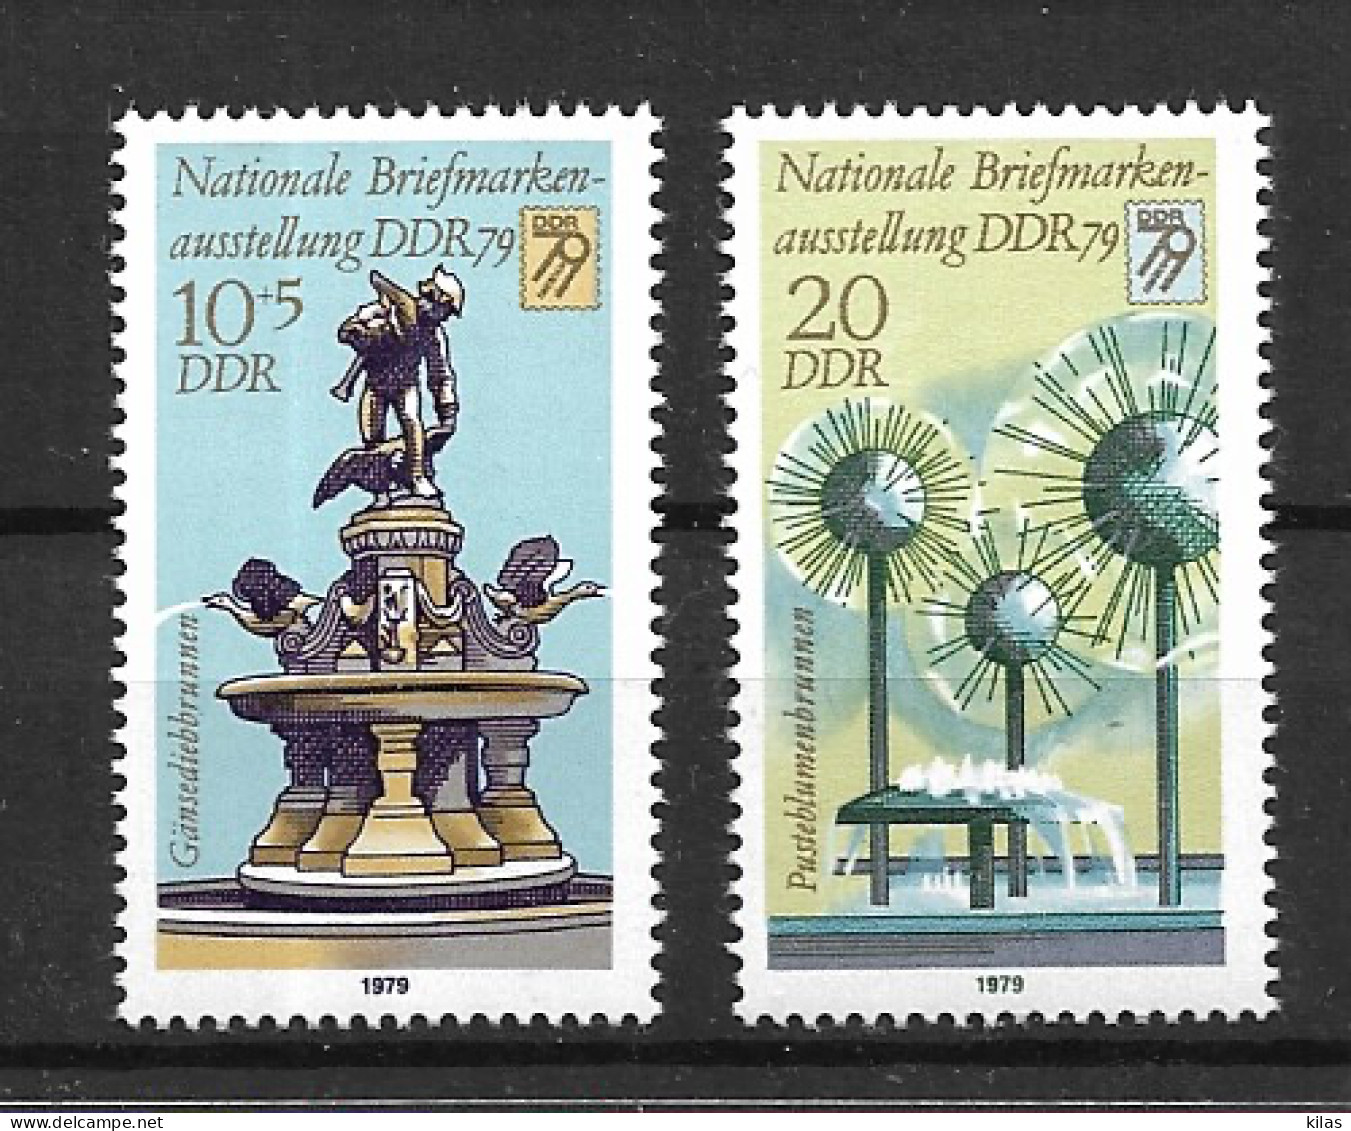 GERMANY, DEMOCRATIC REPUBLIC 1979  DDR 79' + PROOF - Errors & Oddities